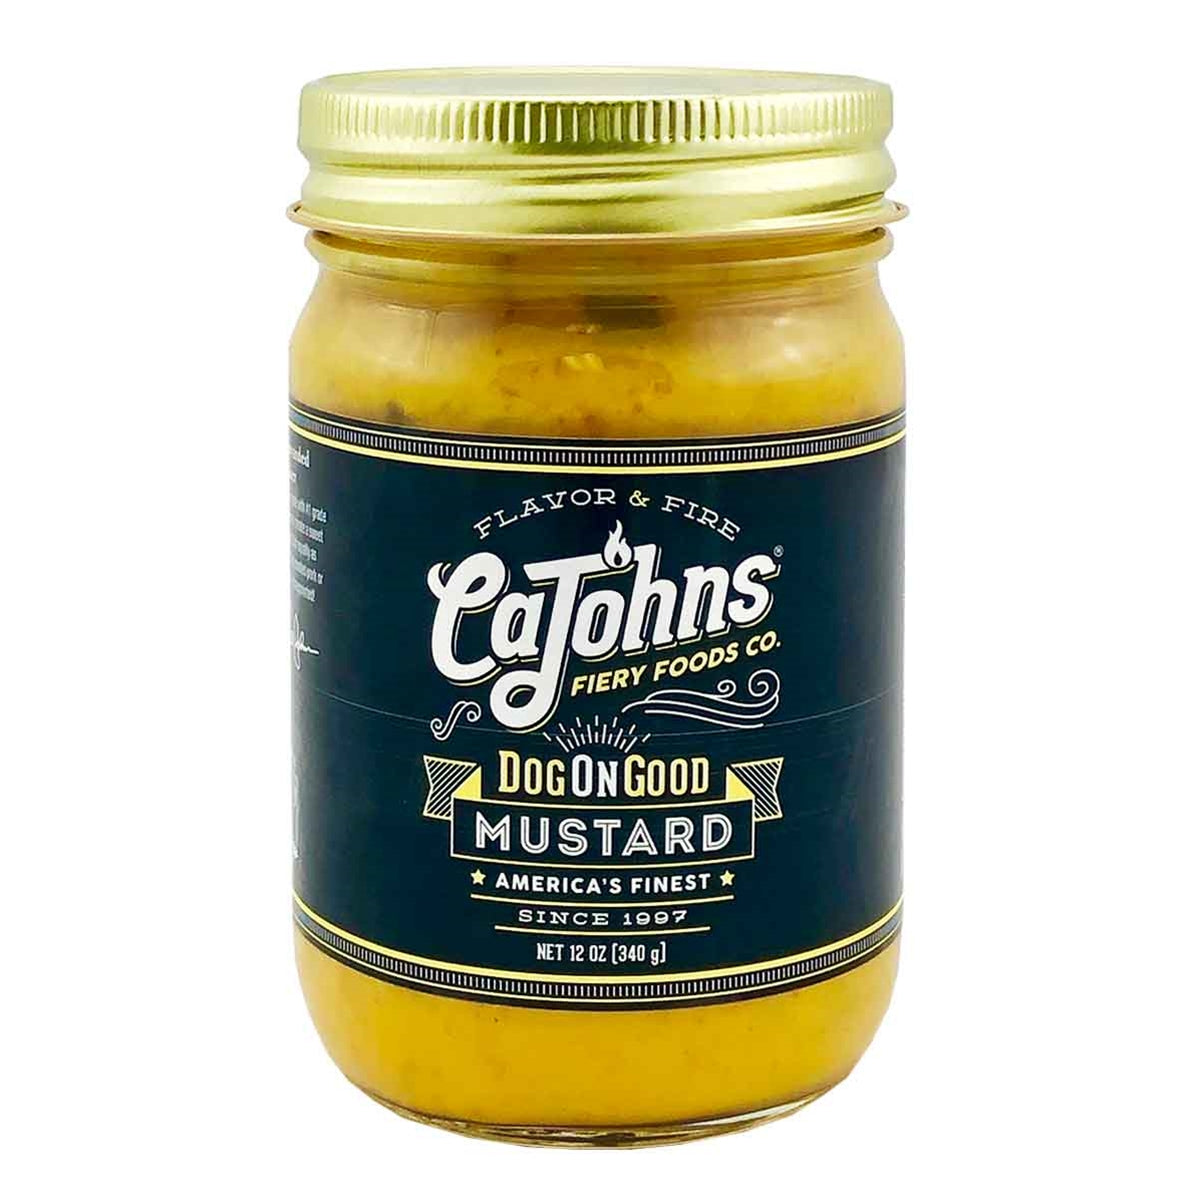 Cajohn's Dog-On Good Mustard